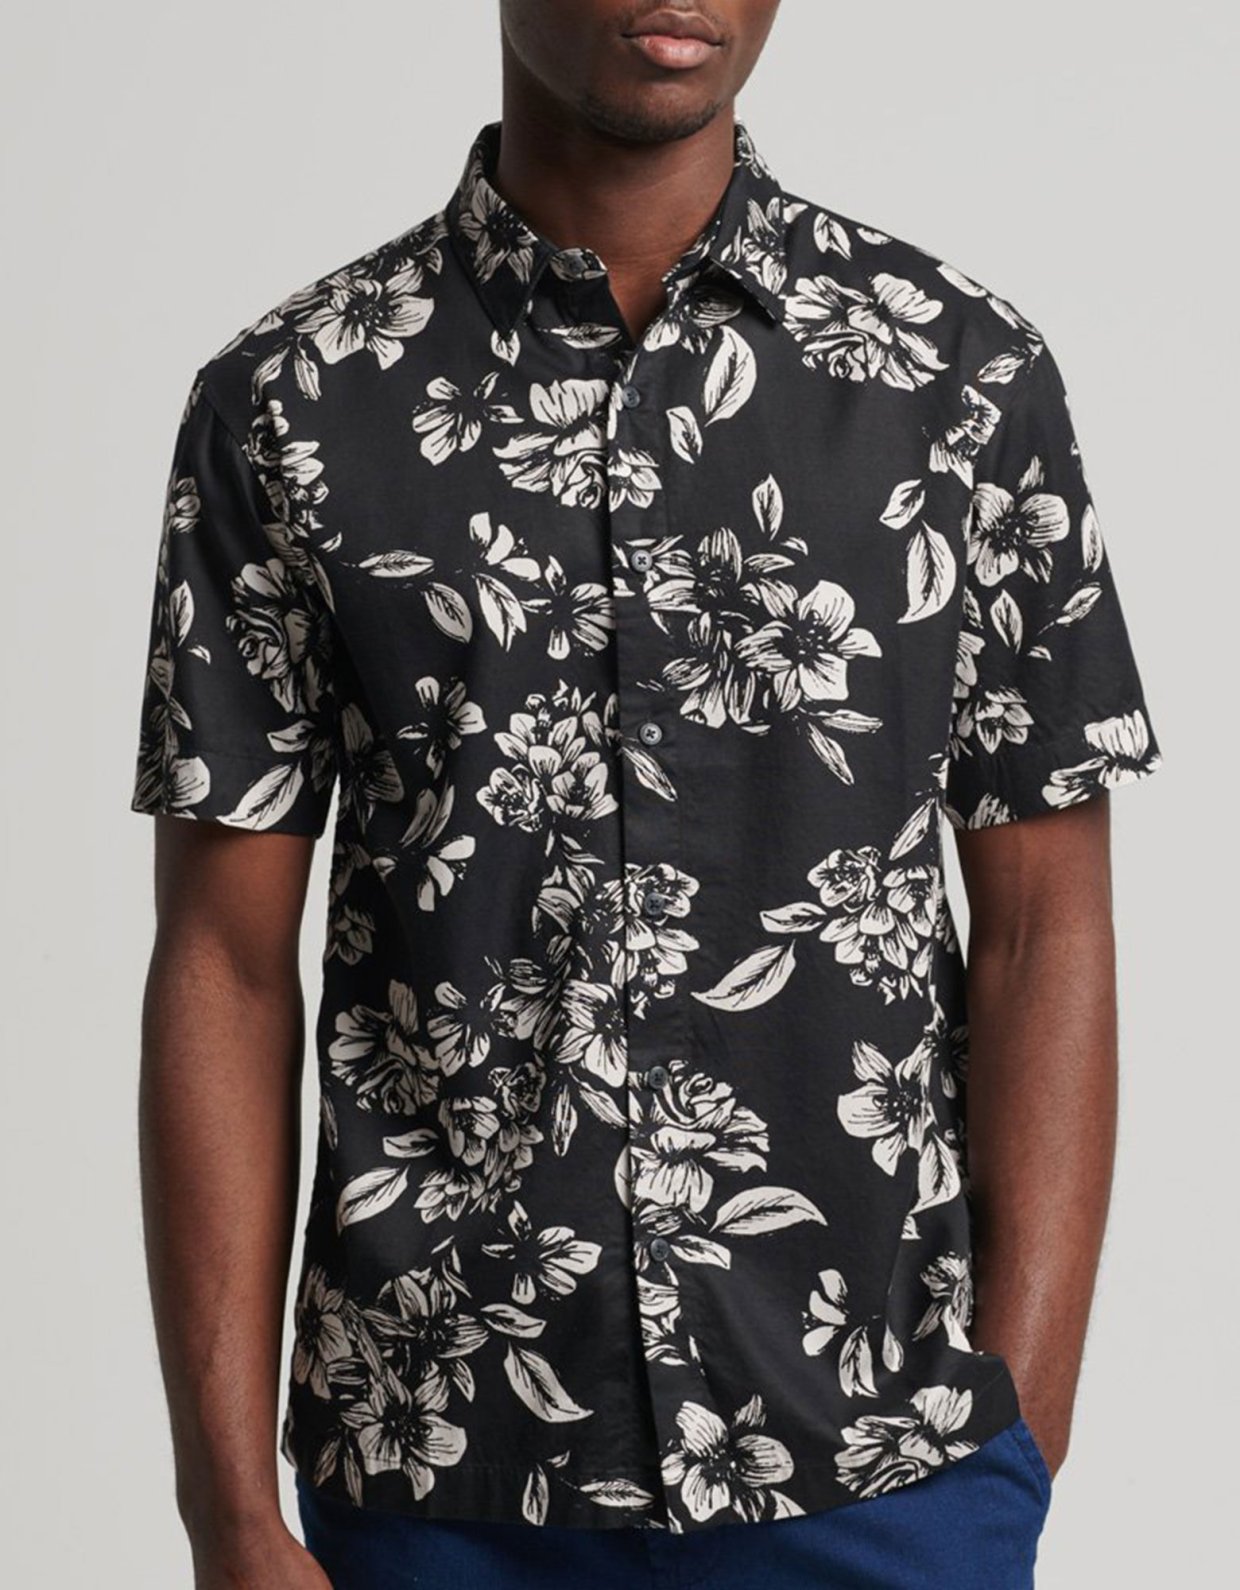 Superdry Vintage Hawaiian shirt black floral